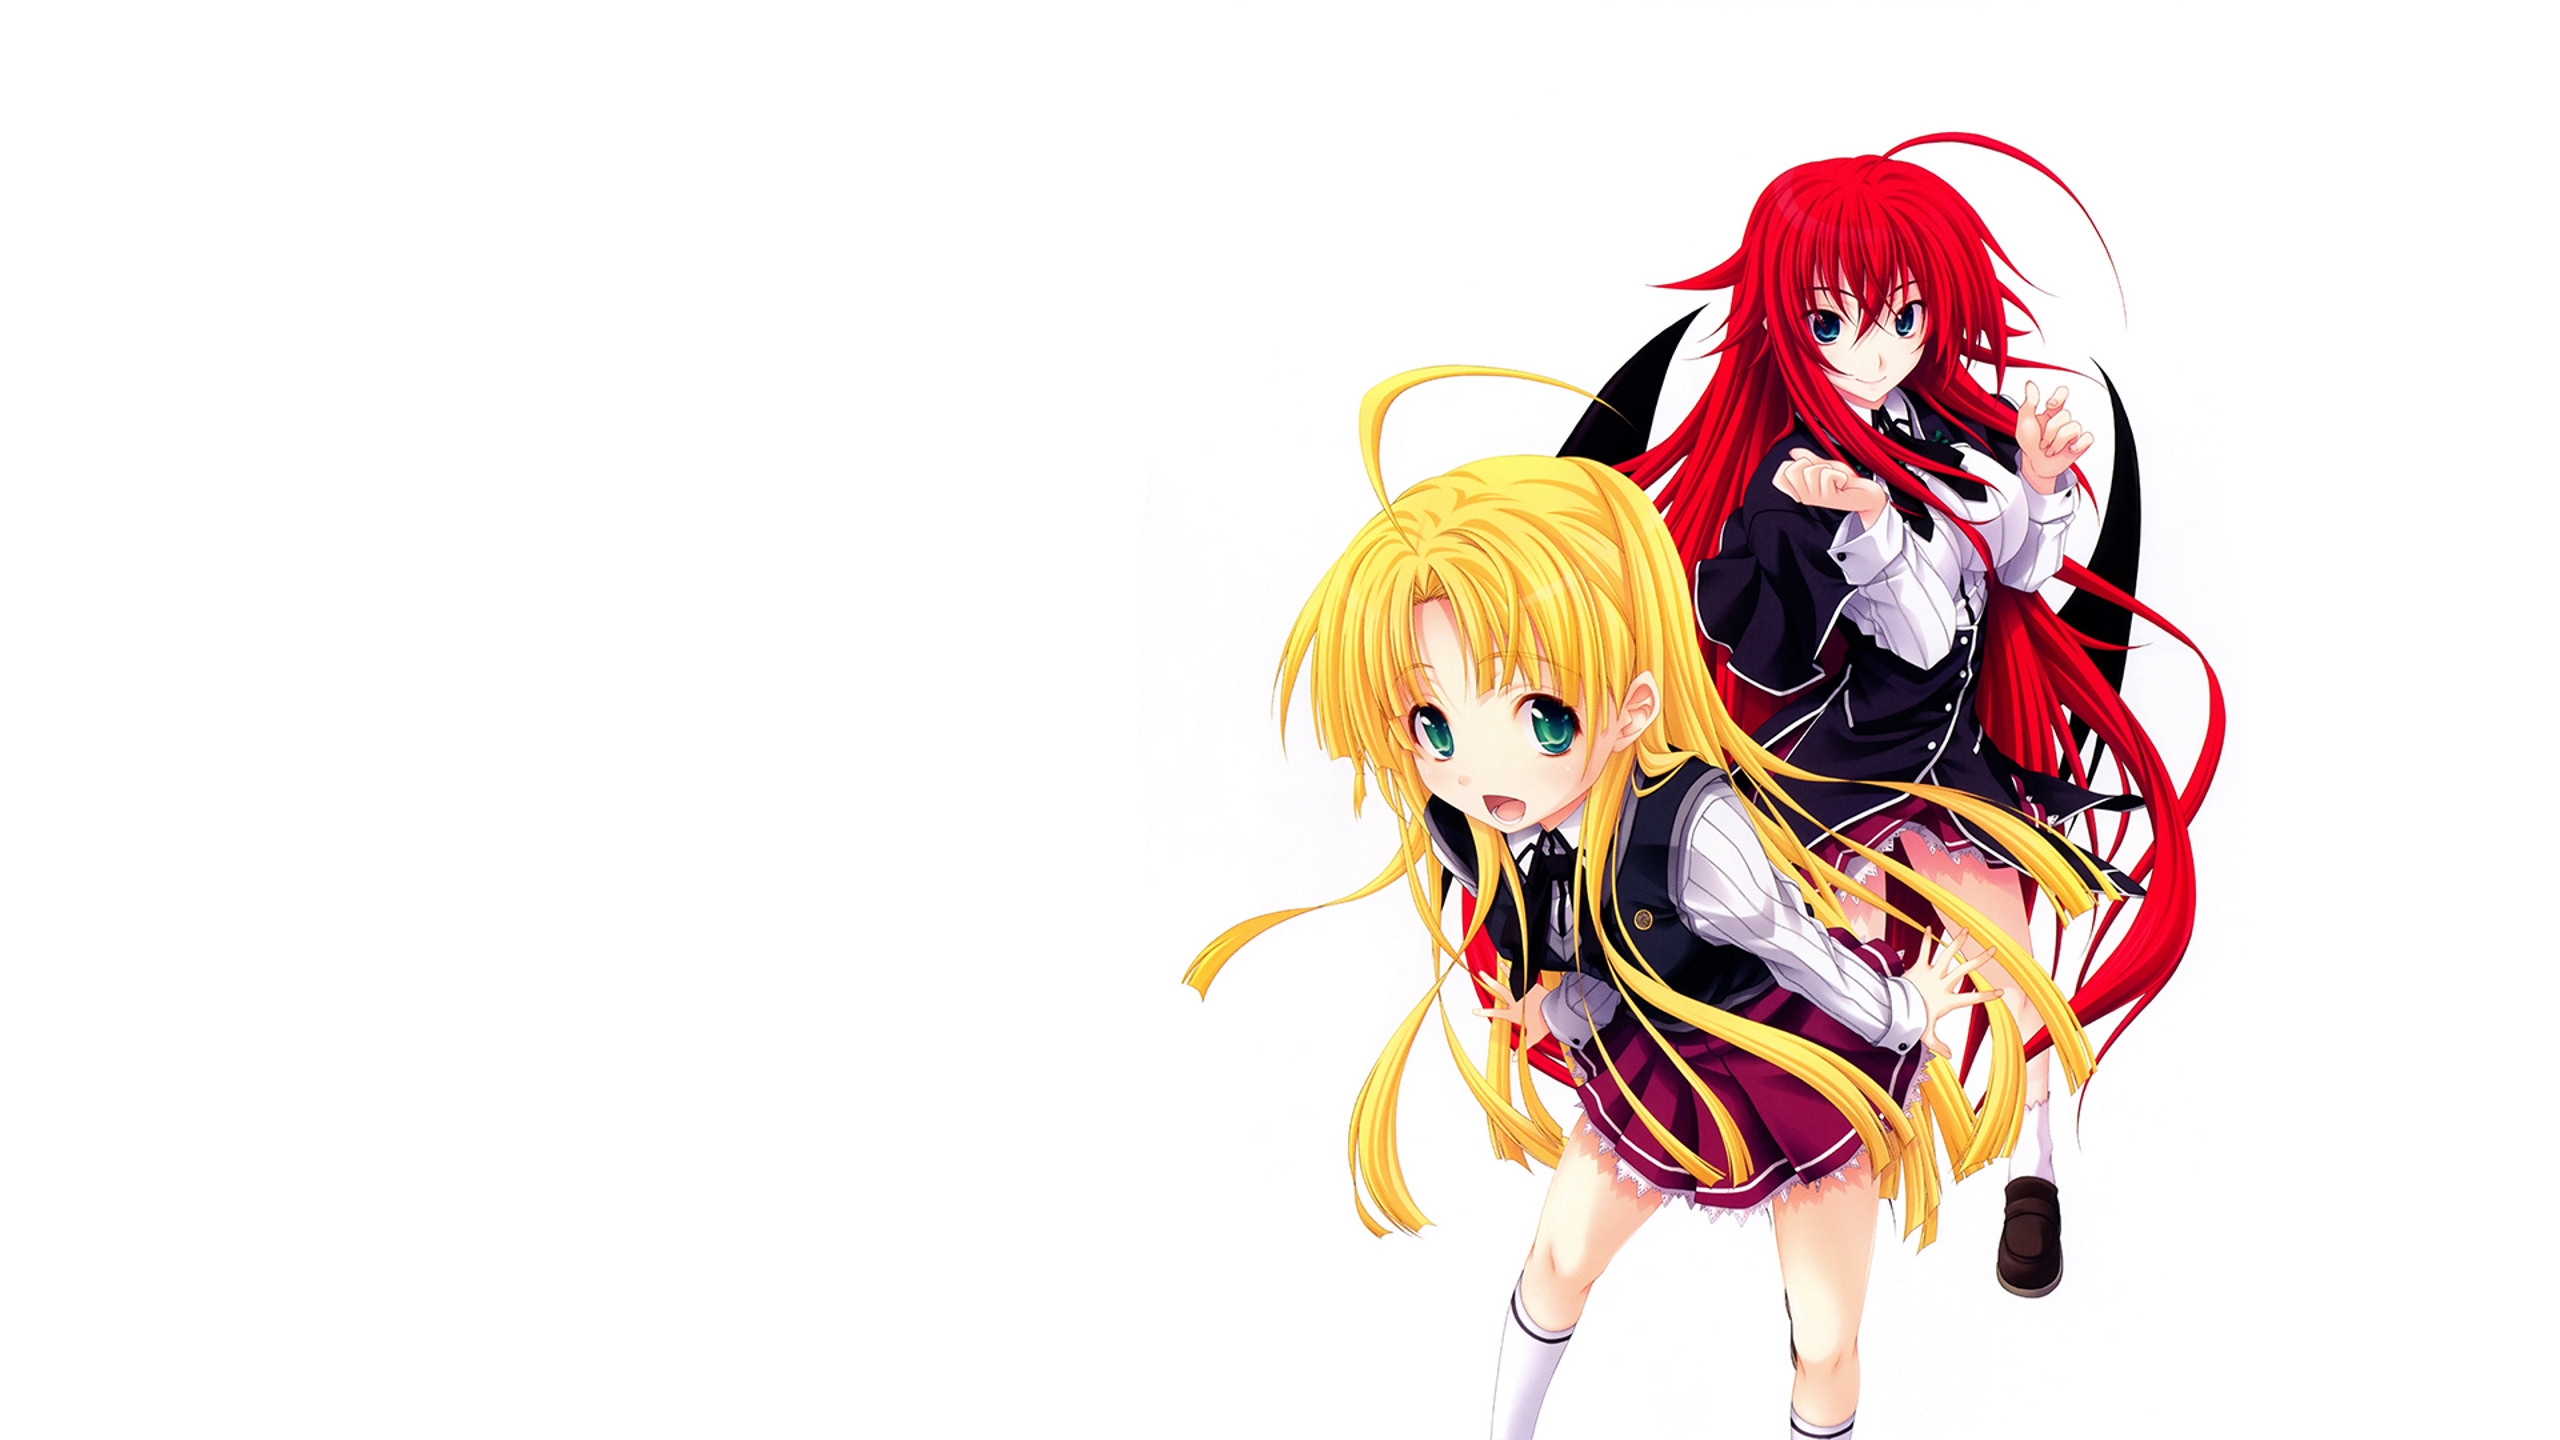 Anime High School DxD HD Wallpaper | Hintergrund